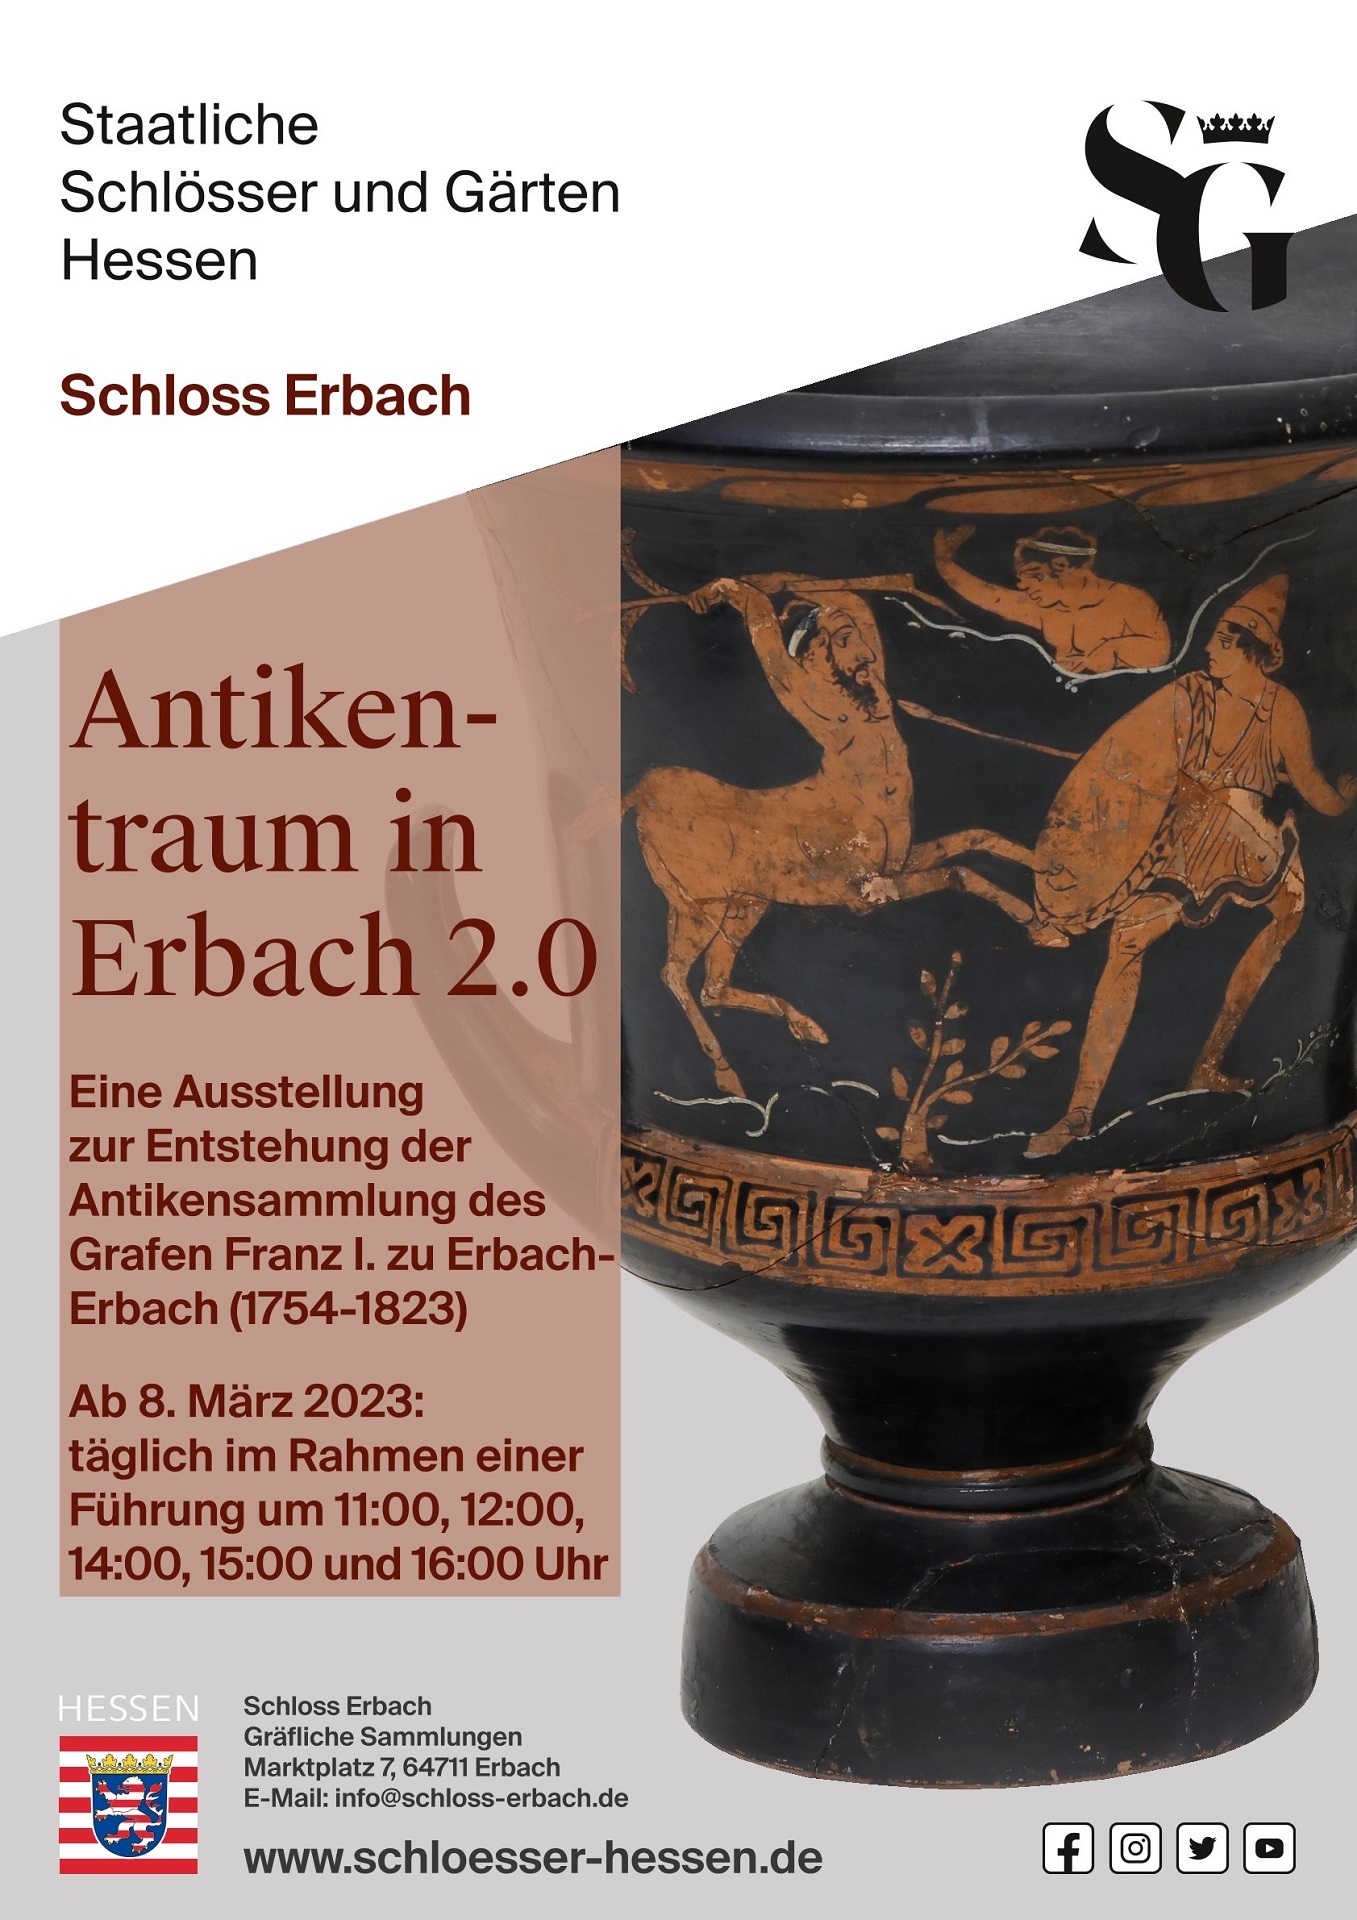 SG Plakat Antikentraum in Erbach 2 0